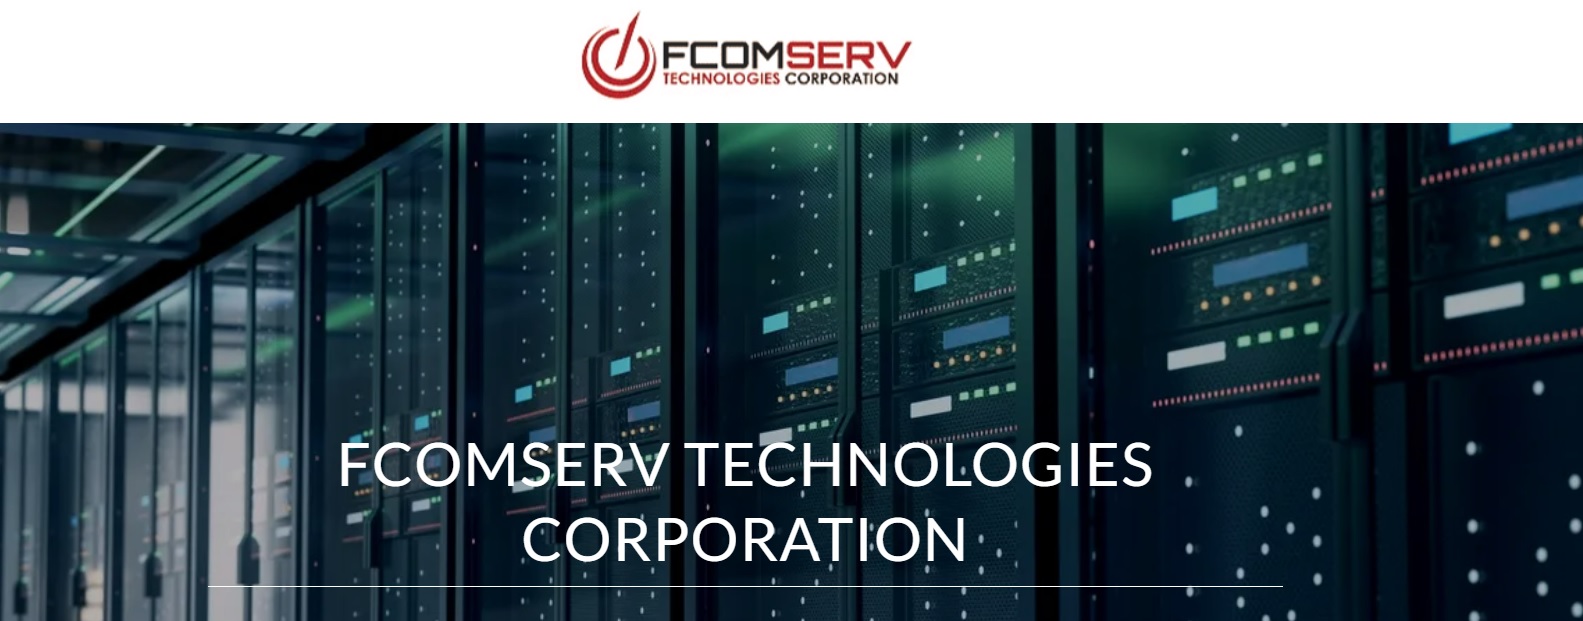 FCOMSERV Technologies Corporation